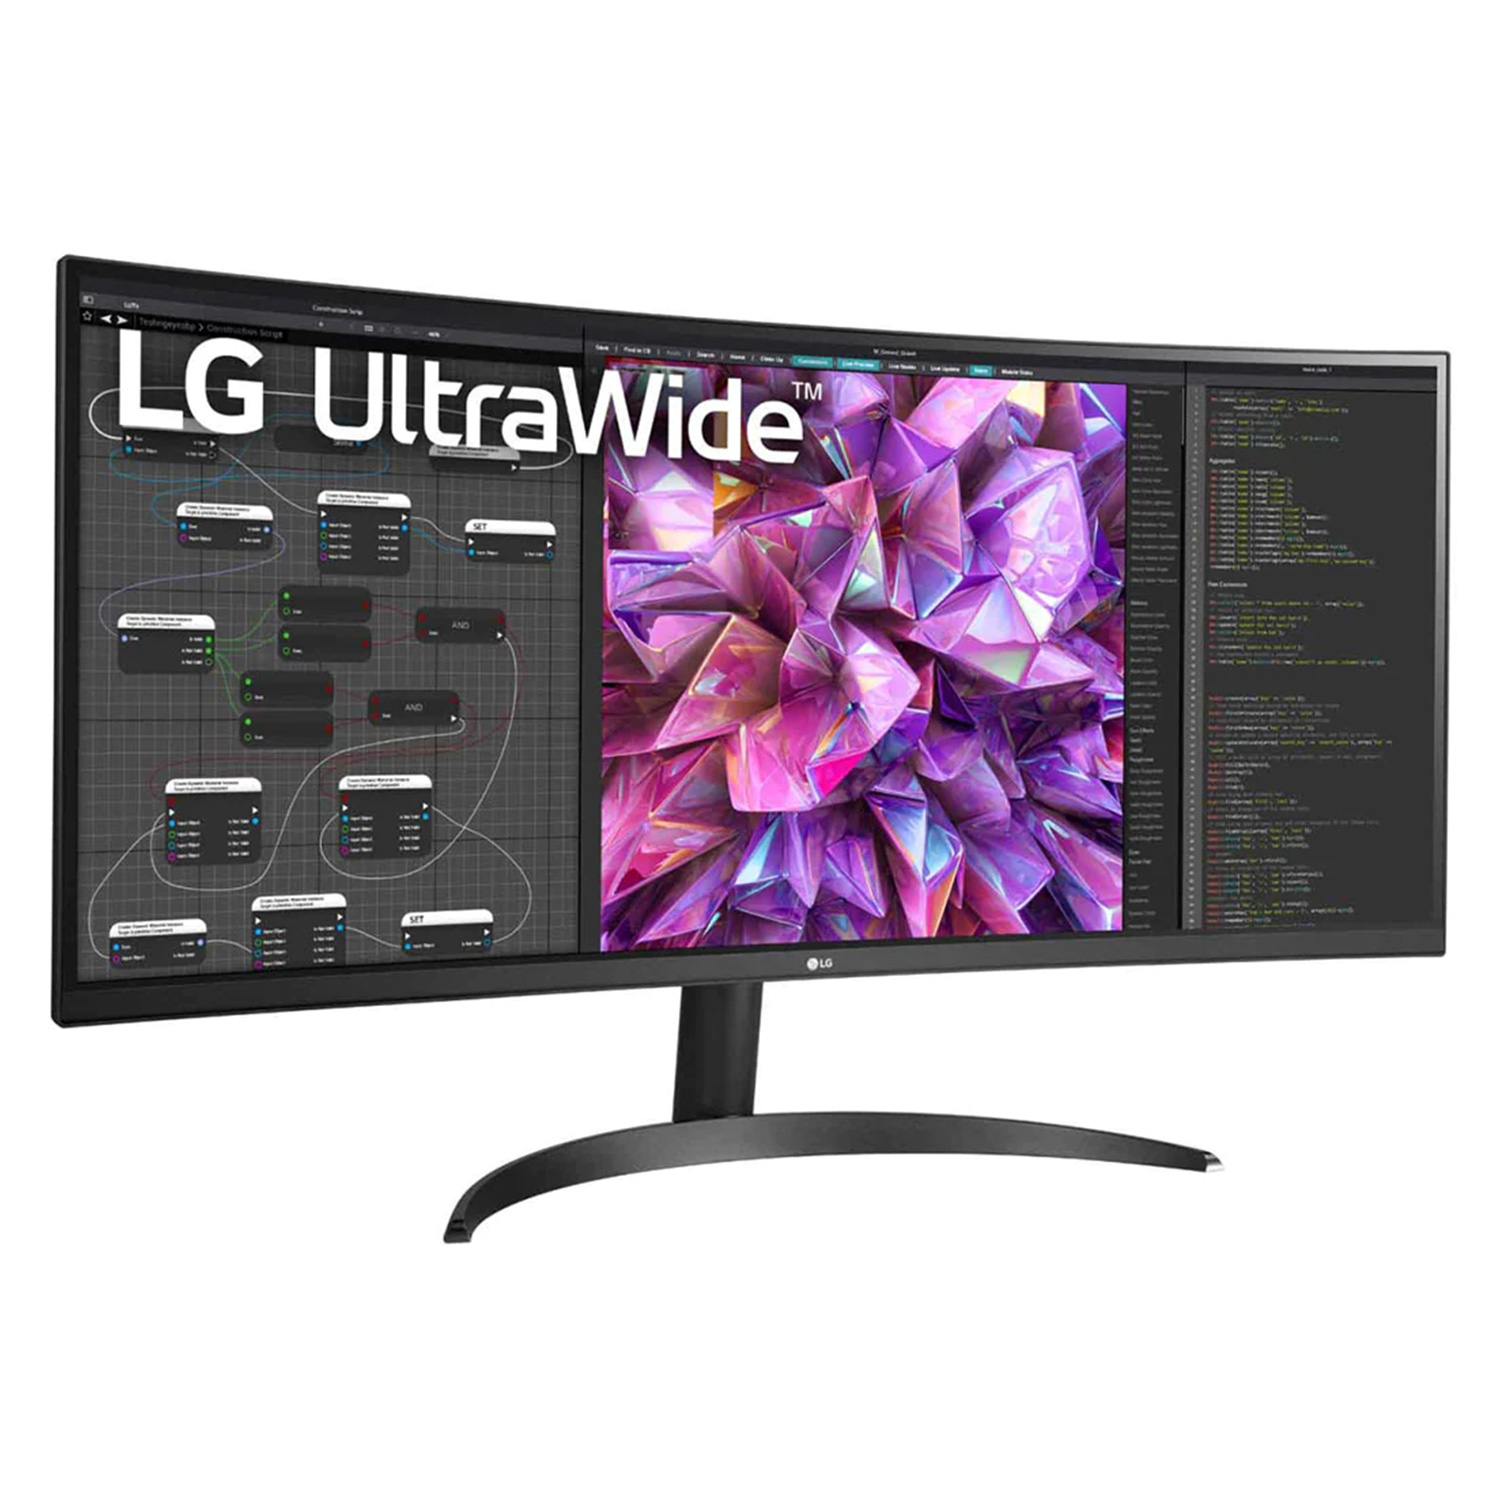 Monitor LG 34WQ60C / Tela 34" / 160HZ / WQHD / Curve / HDR - Preto